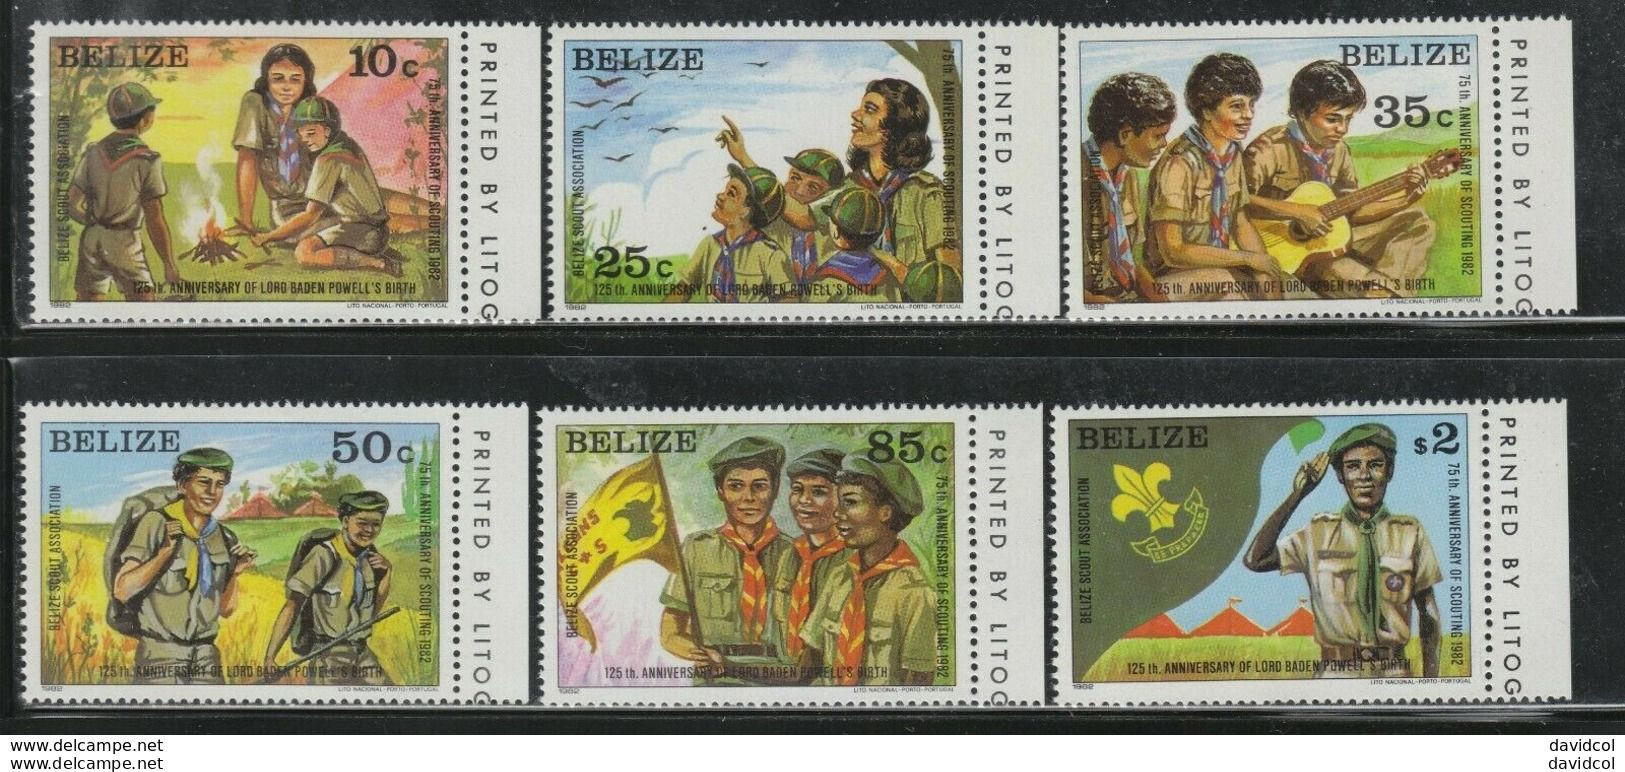 BEI-01- BELIZE- 1982 - SCOUTS - SC: #638-43 - MNH - Boy Scouts 75th Anniversary. SCV: US $ 28.00 - Belize (1973-...)